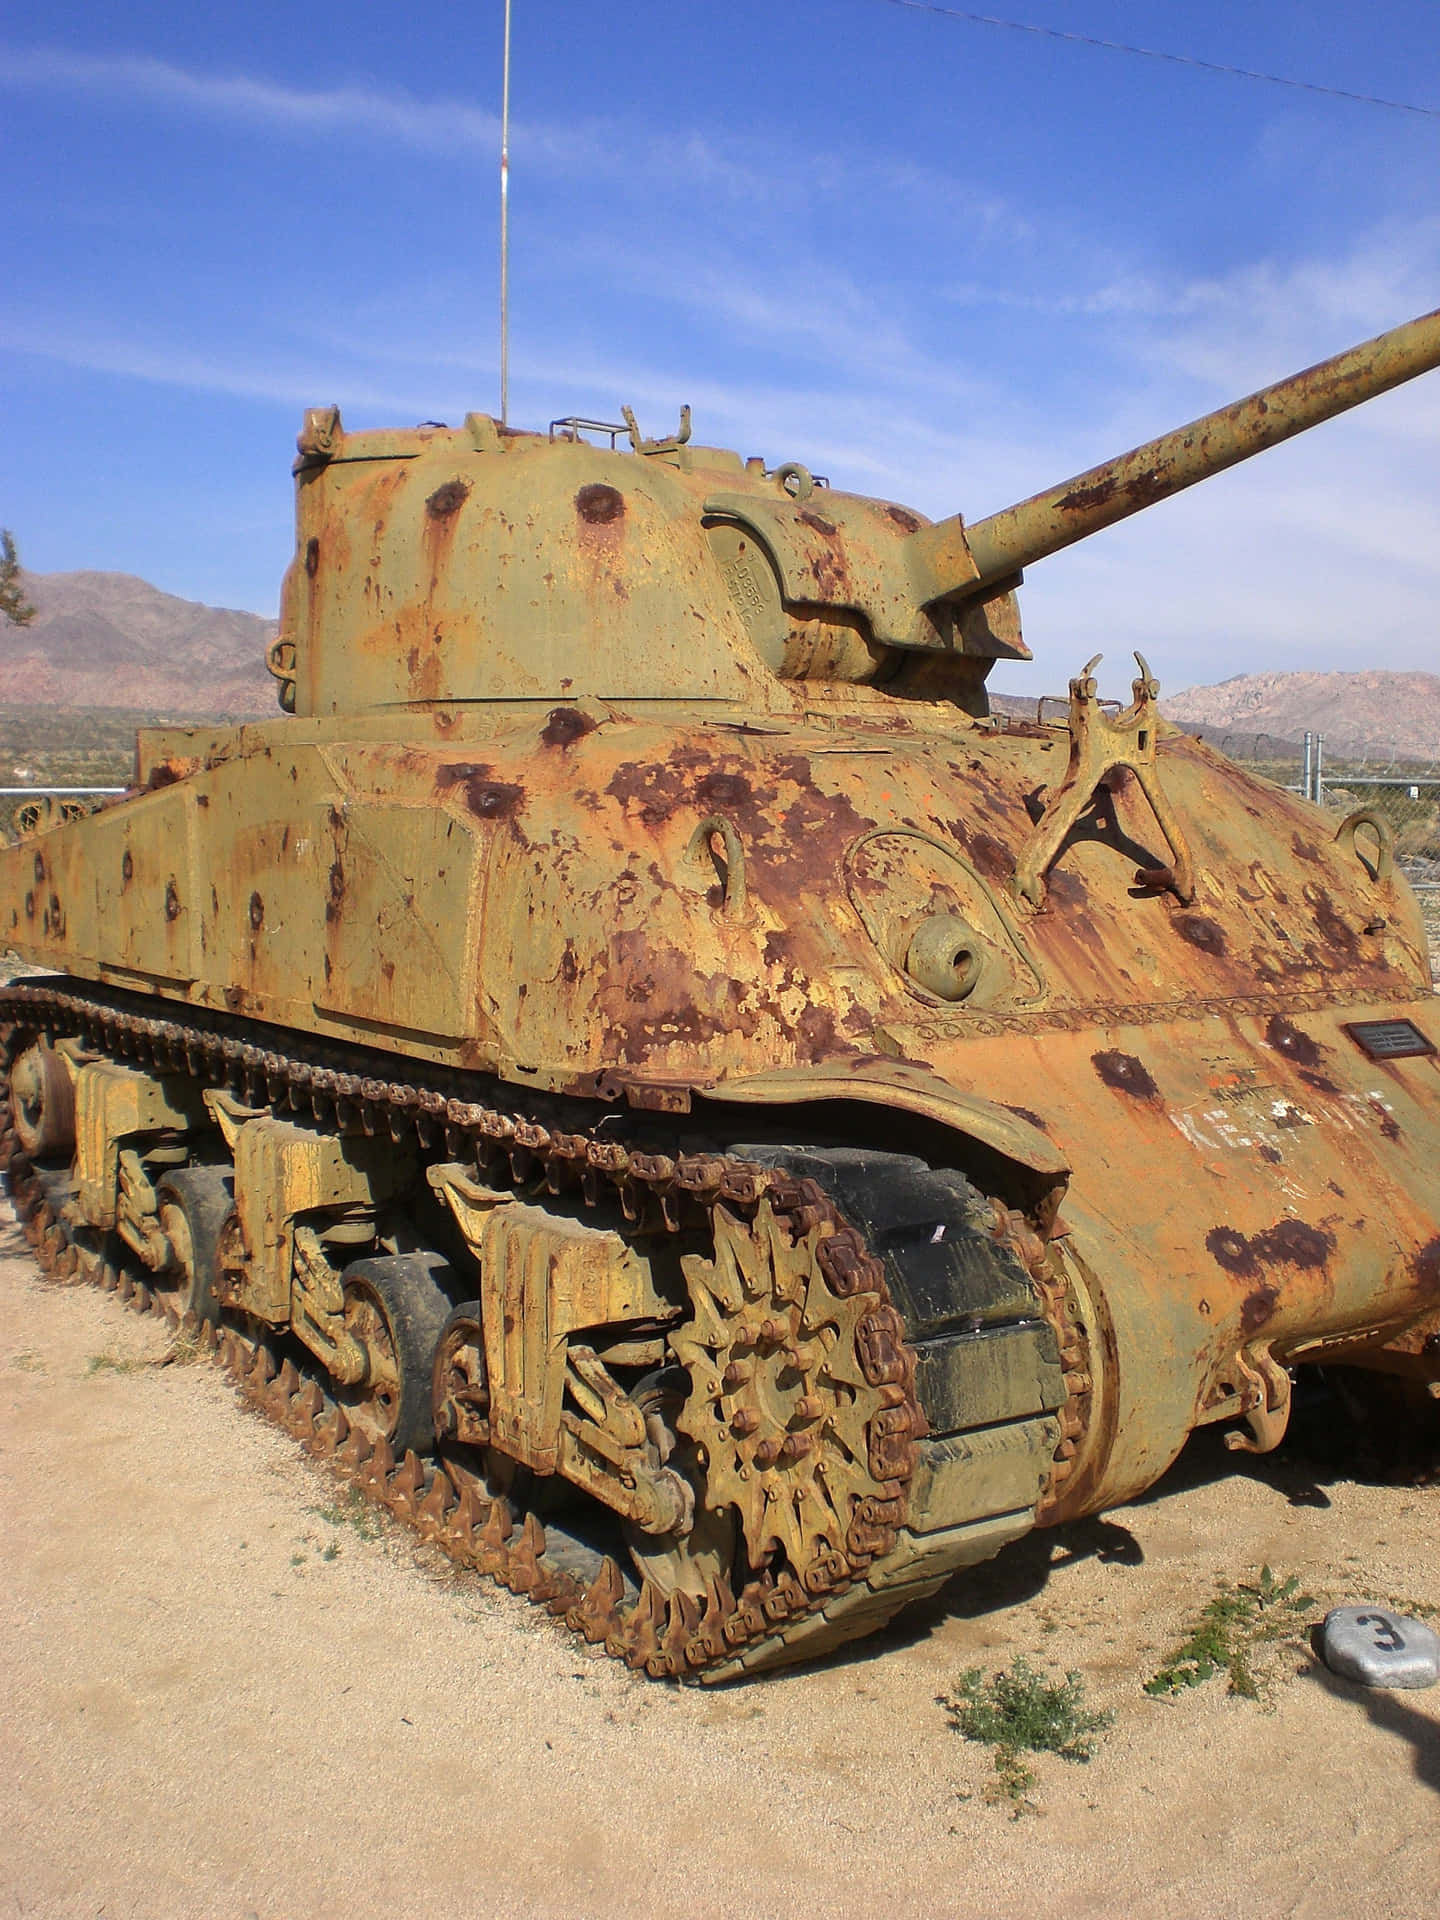 An Up-Close Look at a Tank